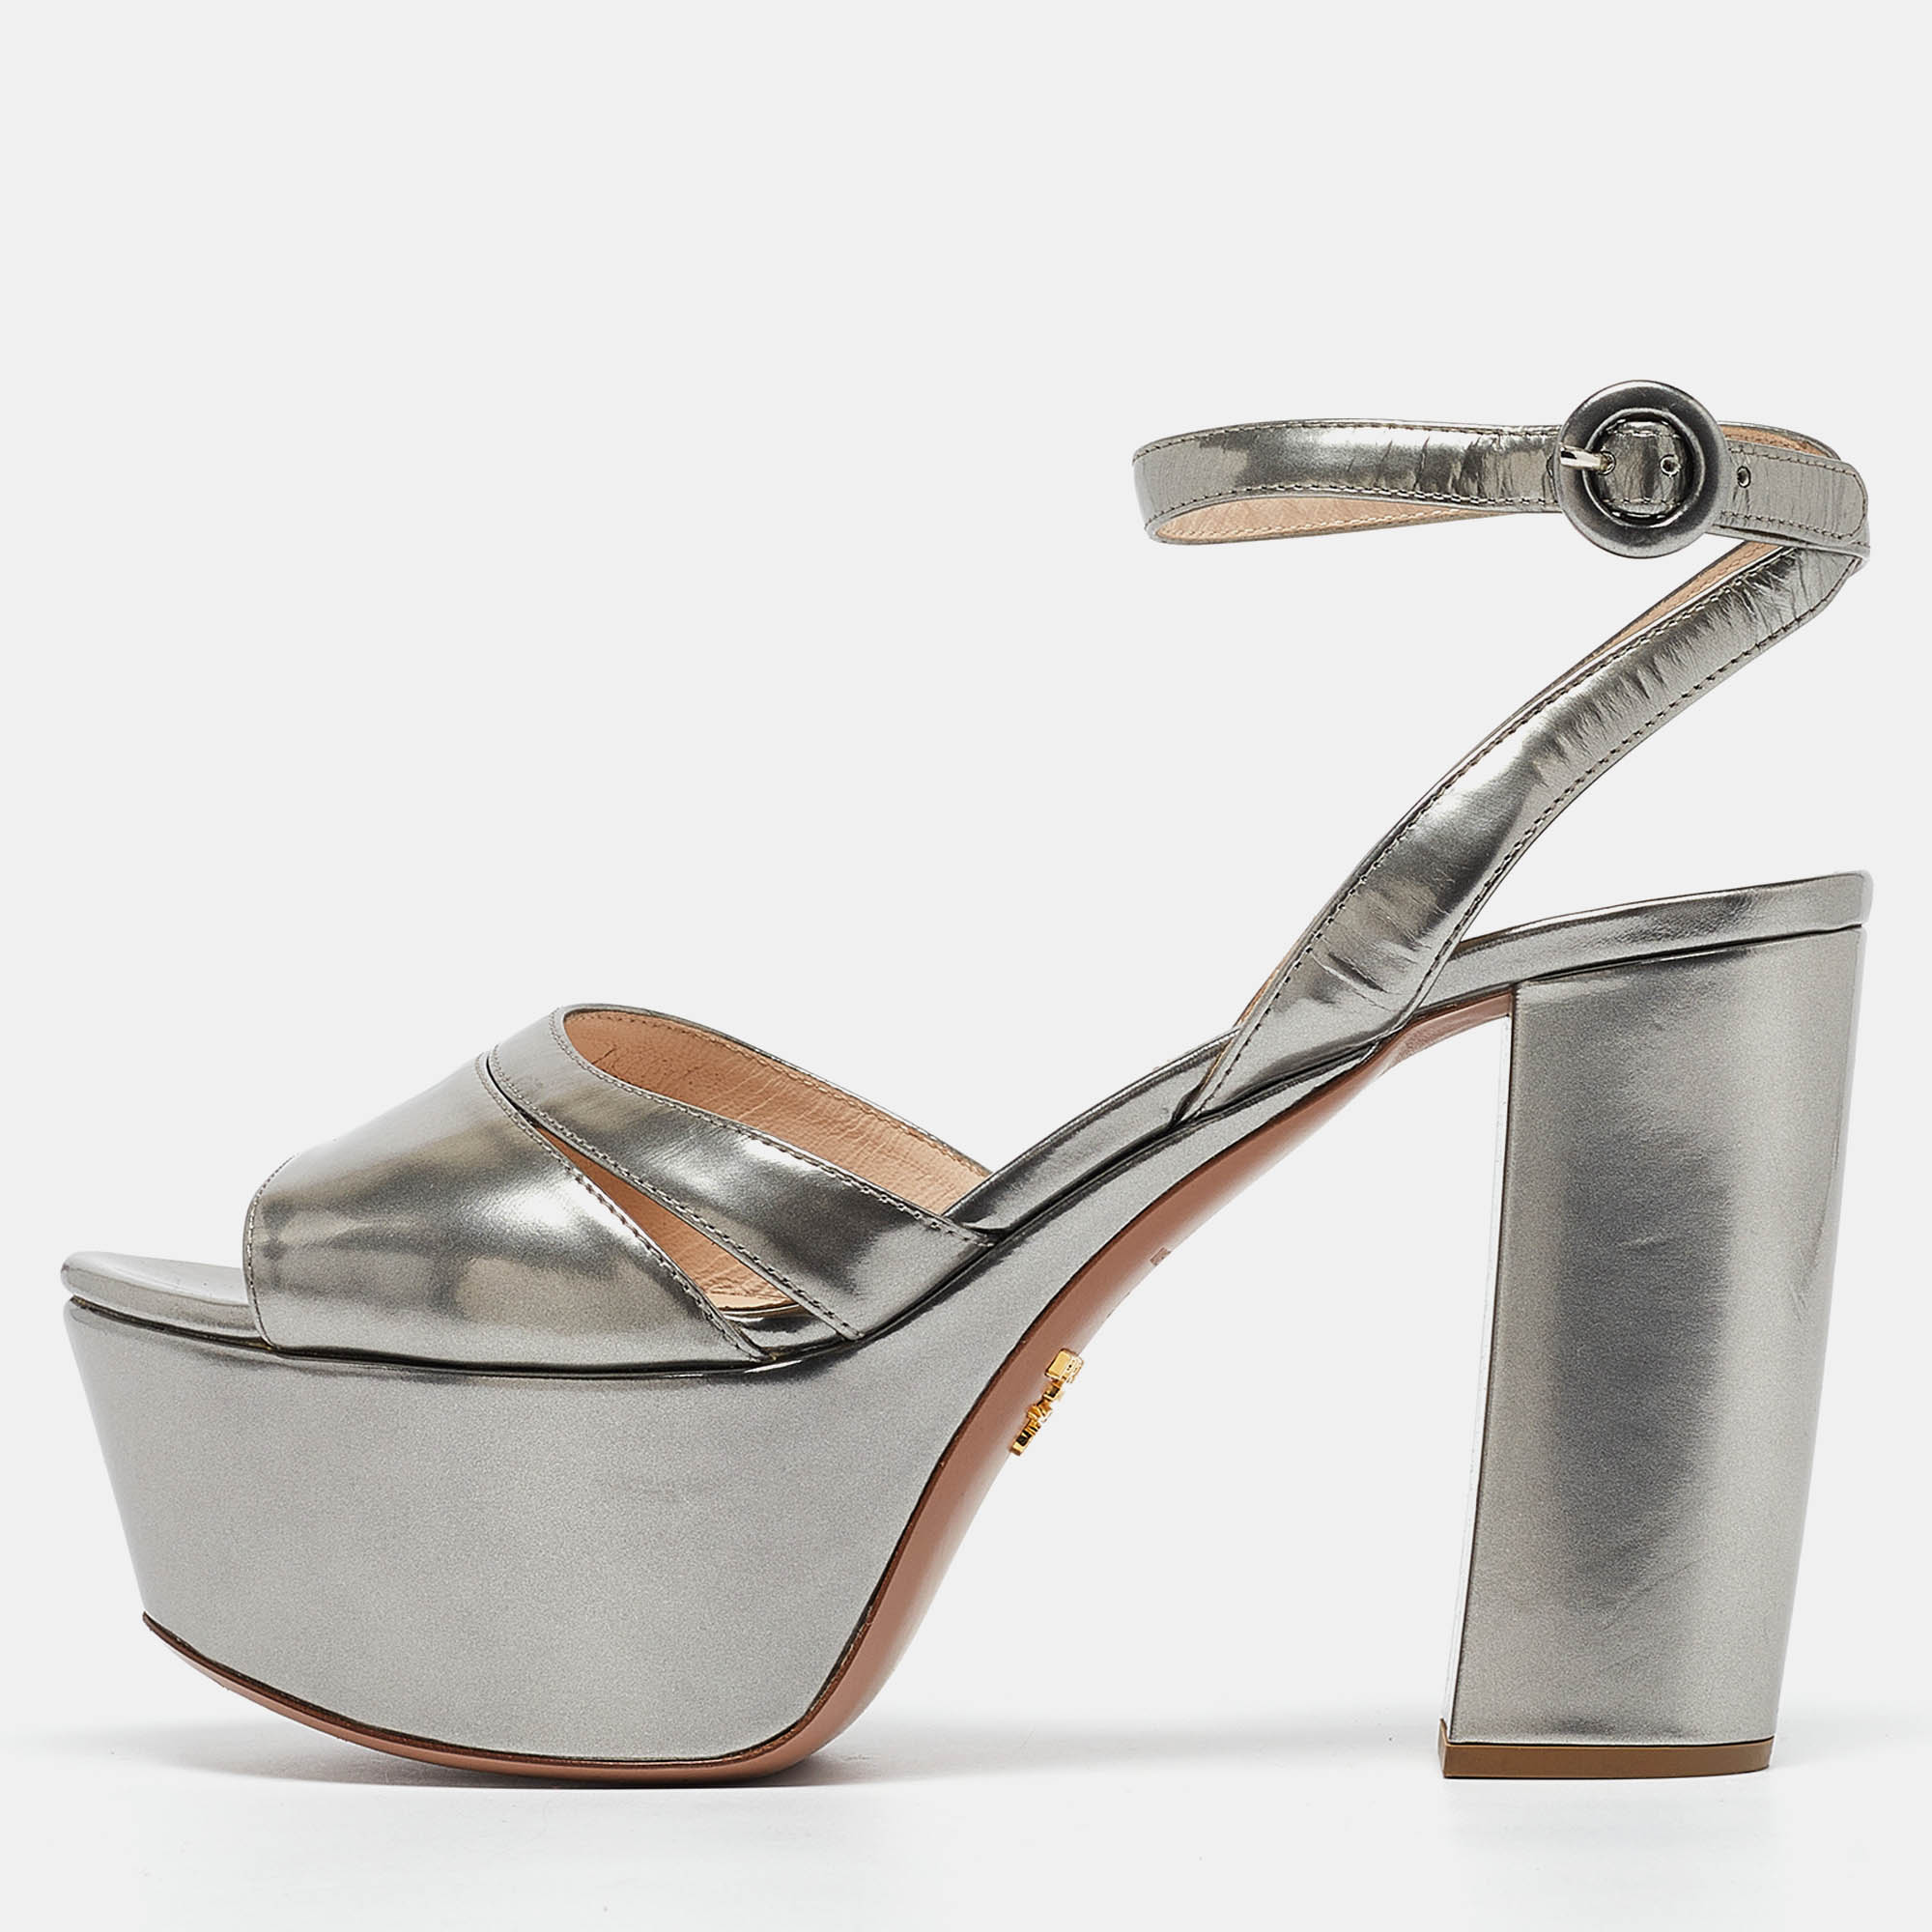 Prada silver patent leather ankle strap platform sandals size 39